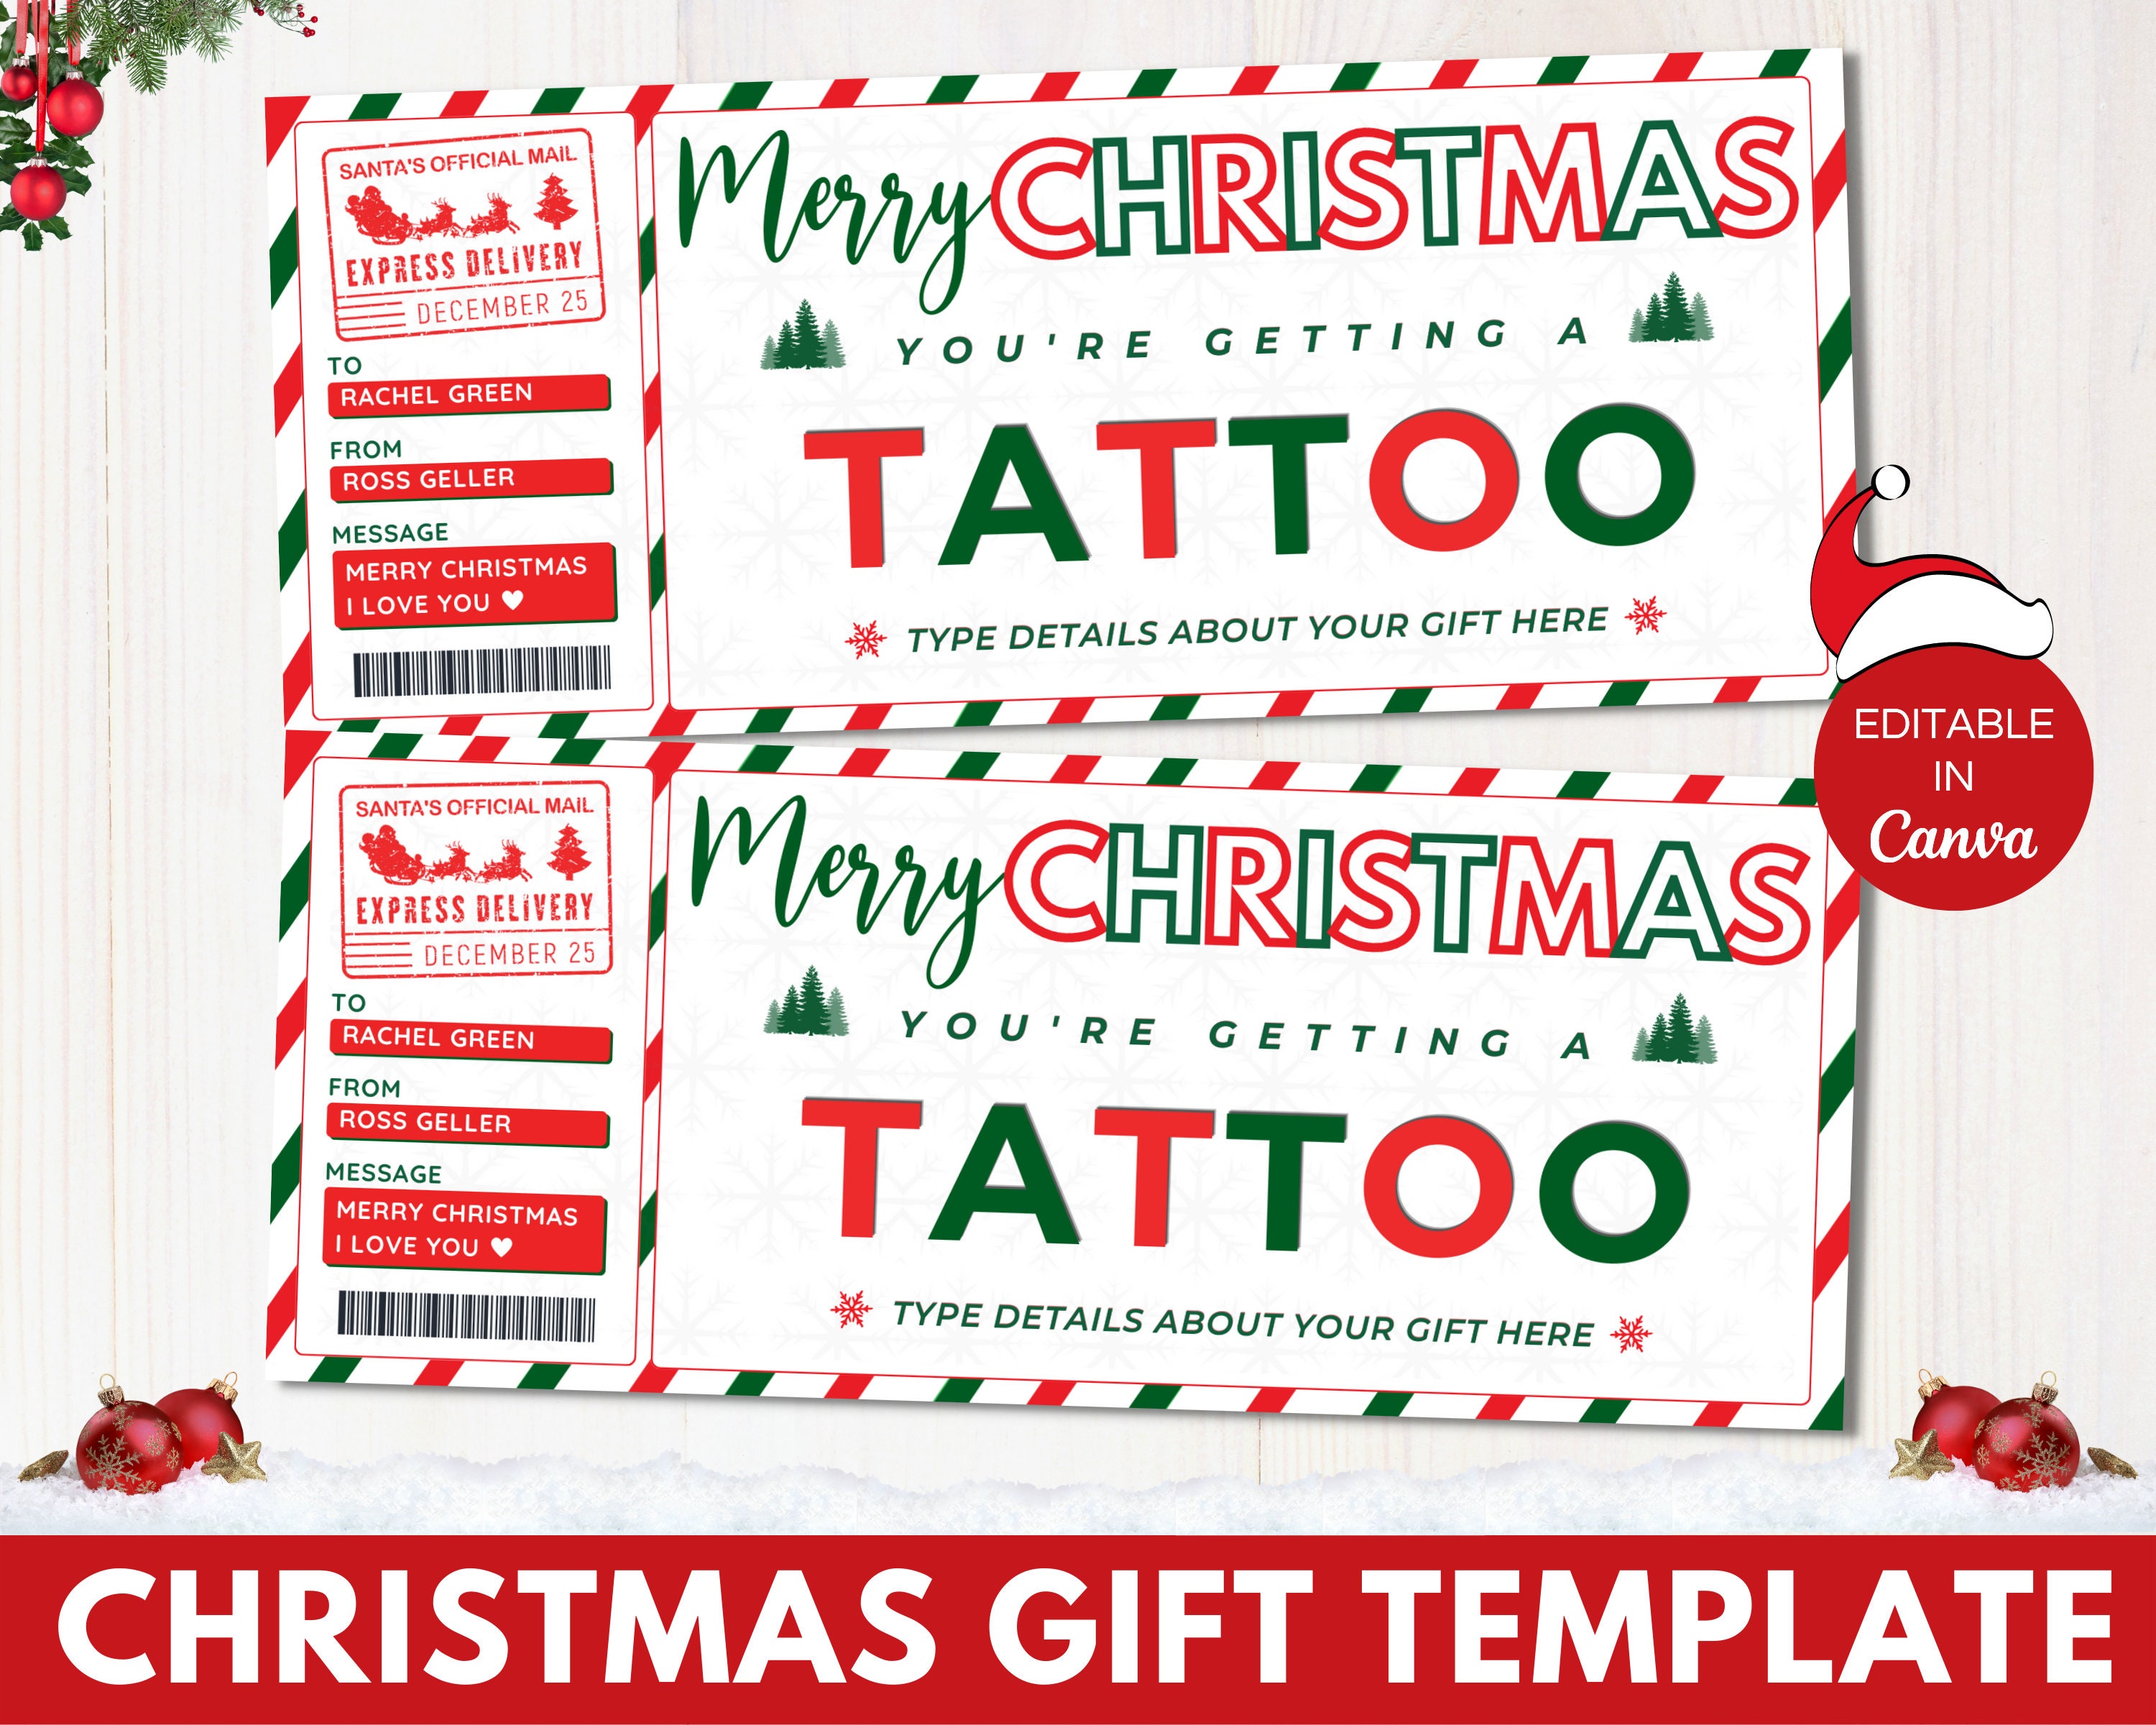 Bon cadeau tatouage, tattoo  Carte cadeau à gratter